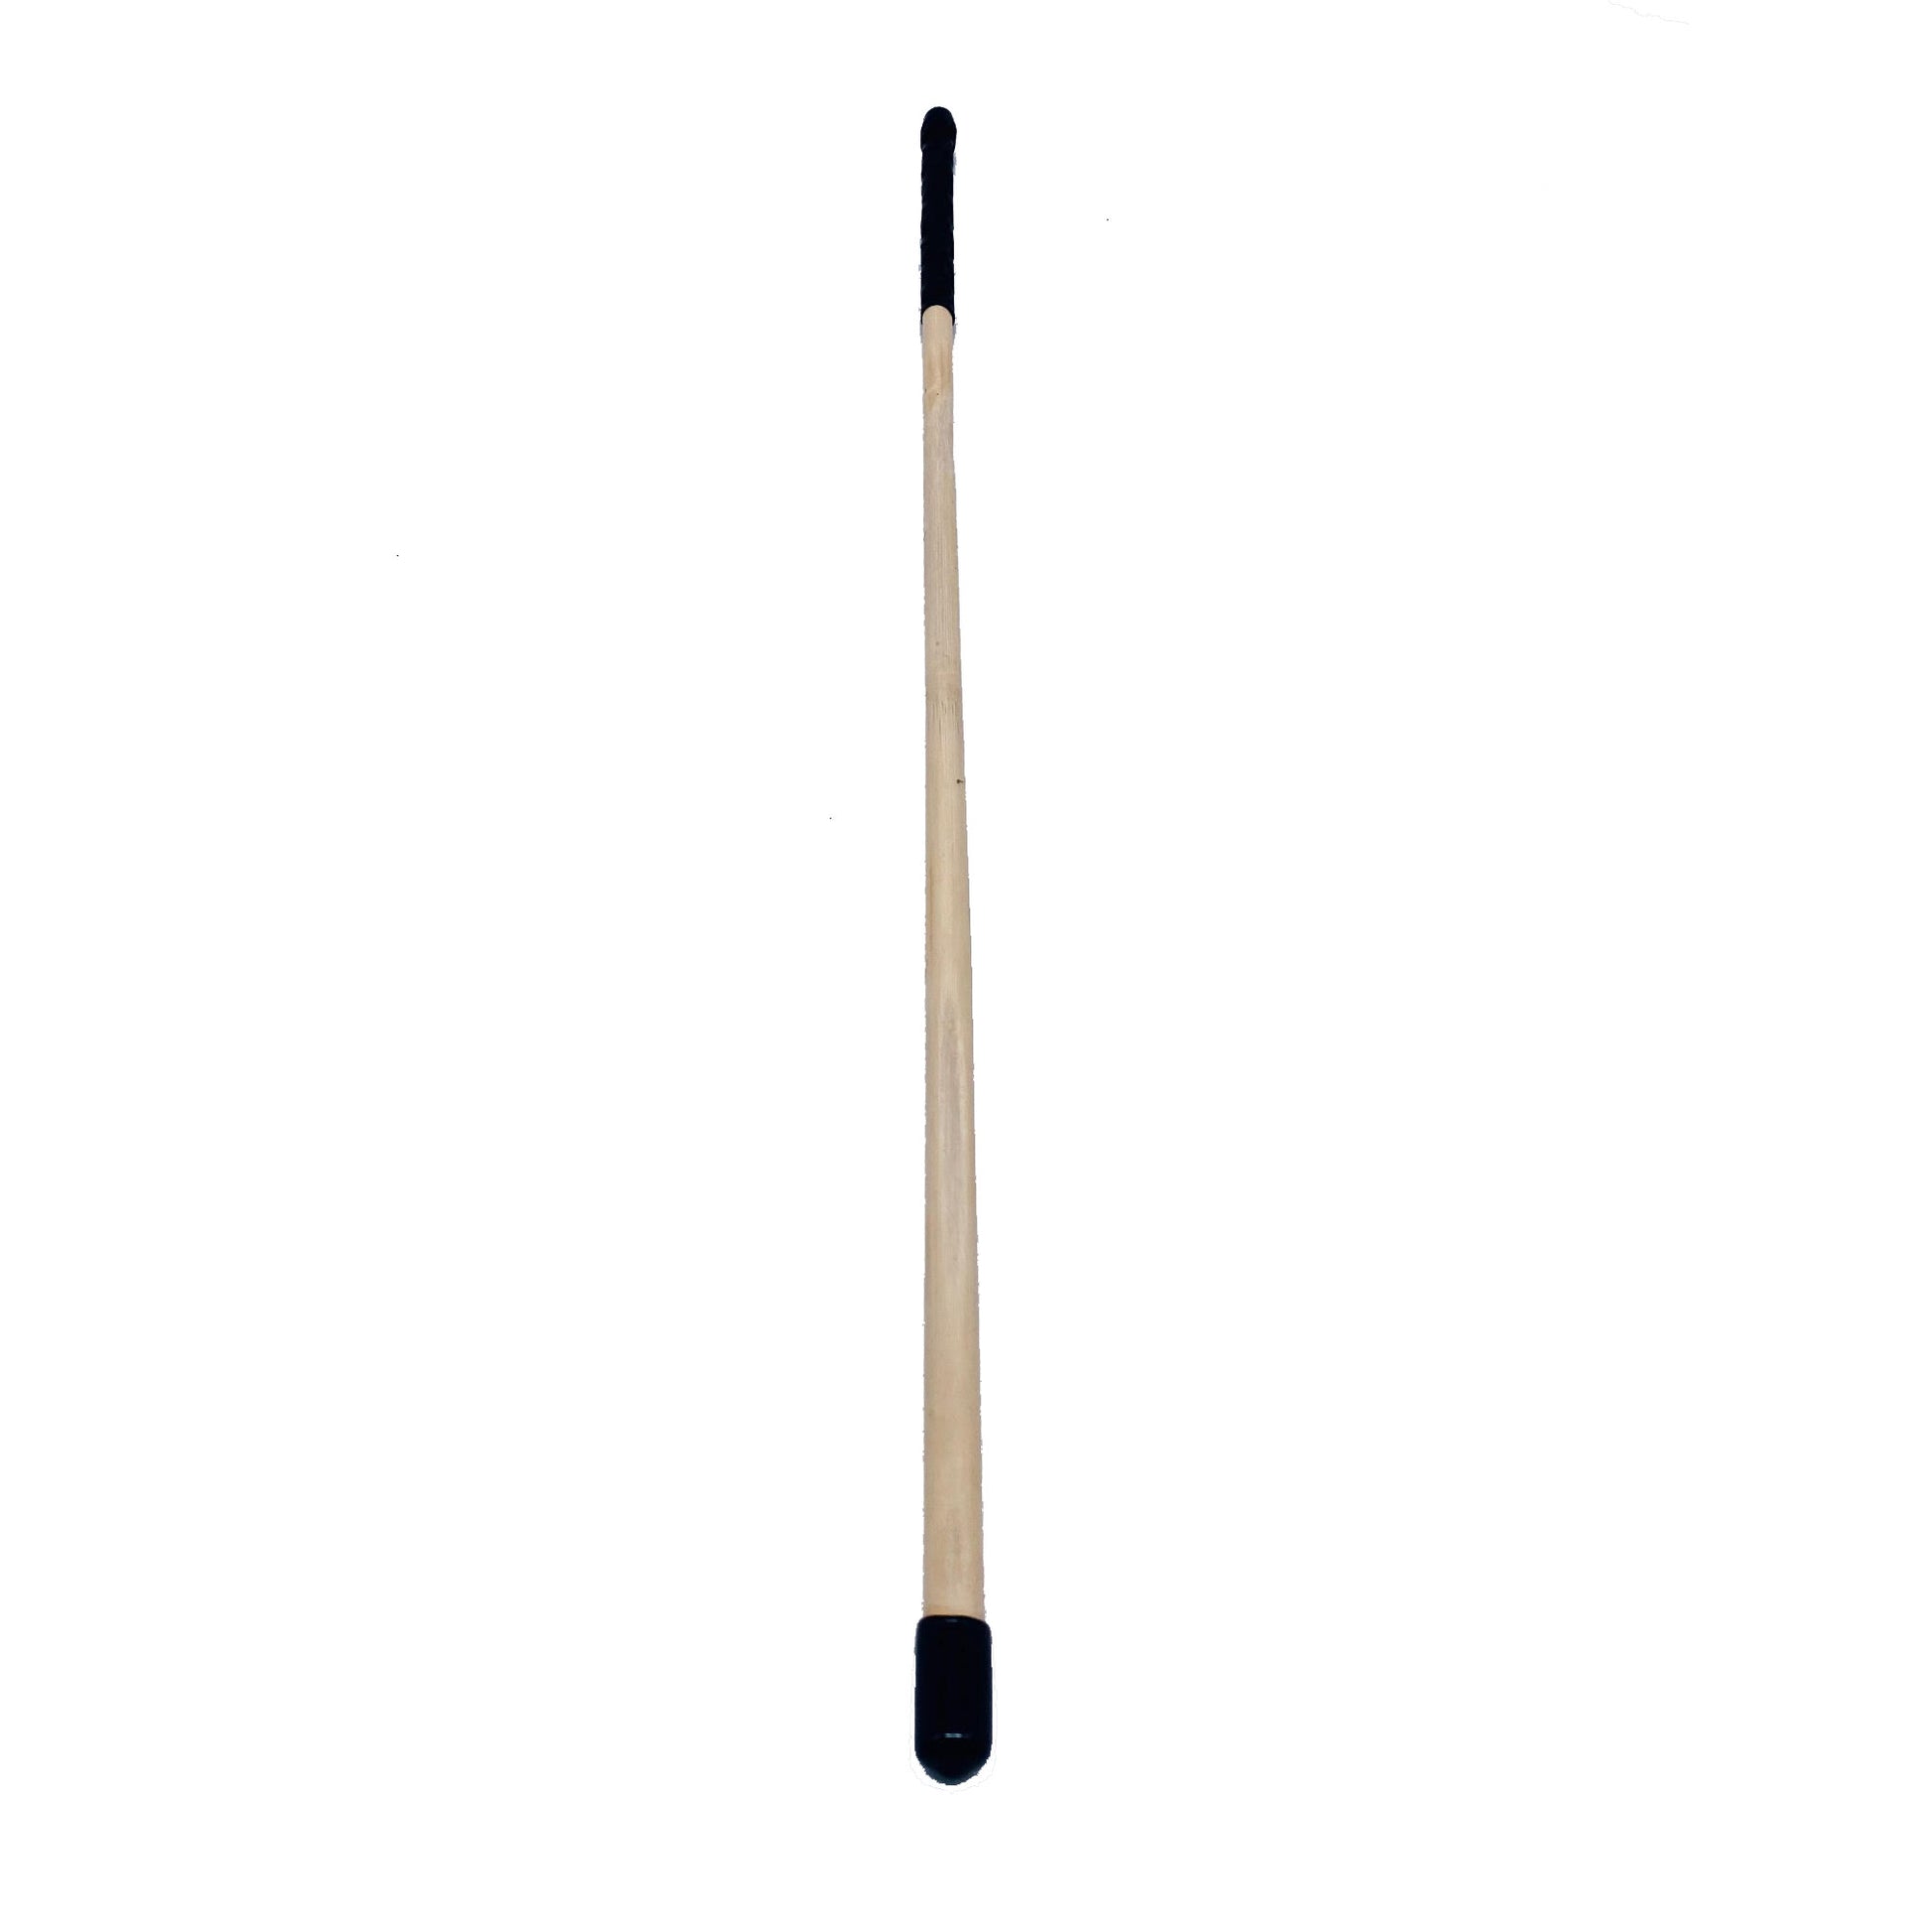 Rattan/Bamboo Spanking Cane, bamboo cane, rattan cane, rattan, bamboo, evil stick, spanking cane, cane, bdsm, impact, punishment, discipline